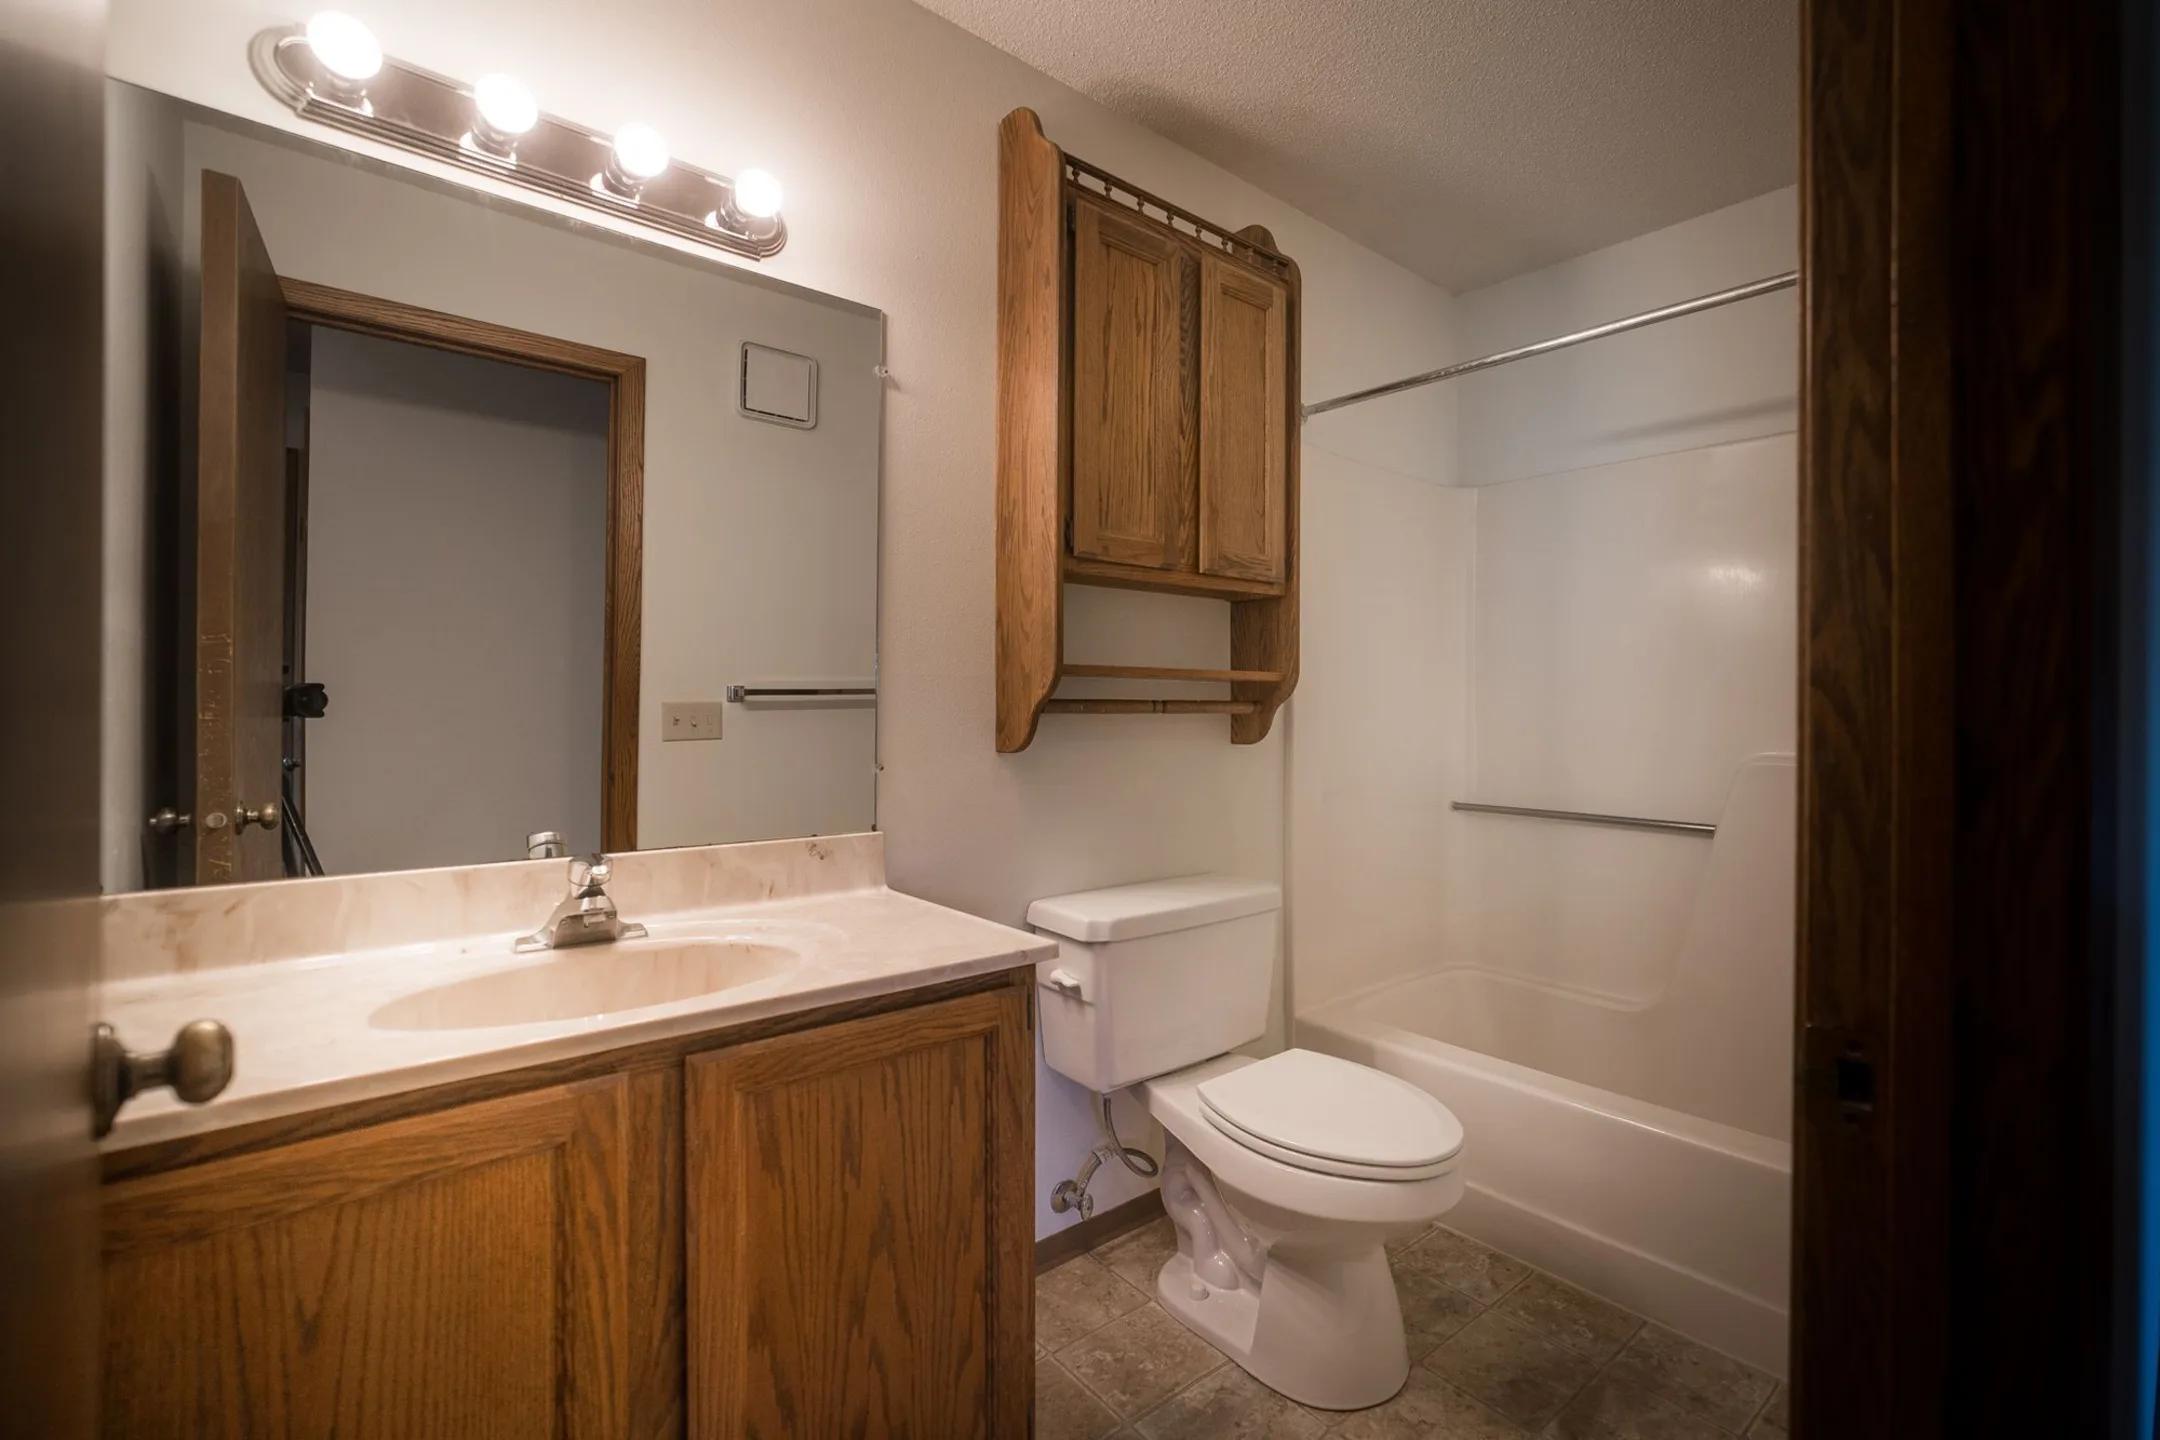 Bathroom - The Concorde Apartments - Sioux Falls, SD